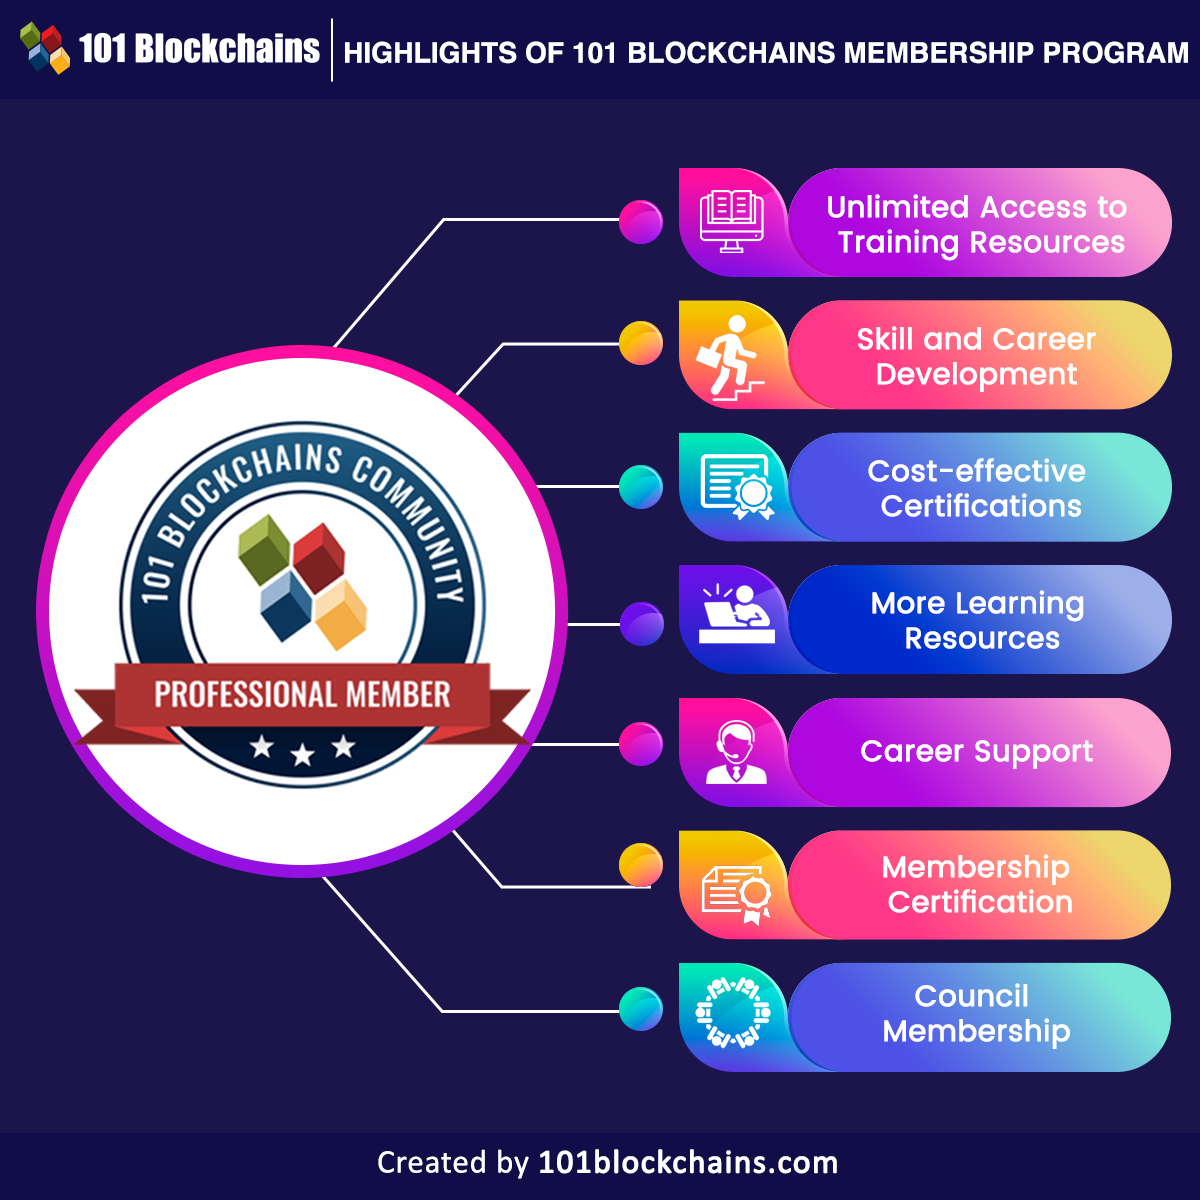 Highlights of 101 Blockchains Membership Program